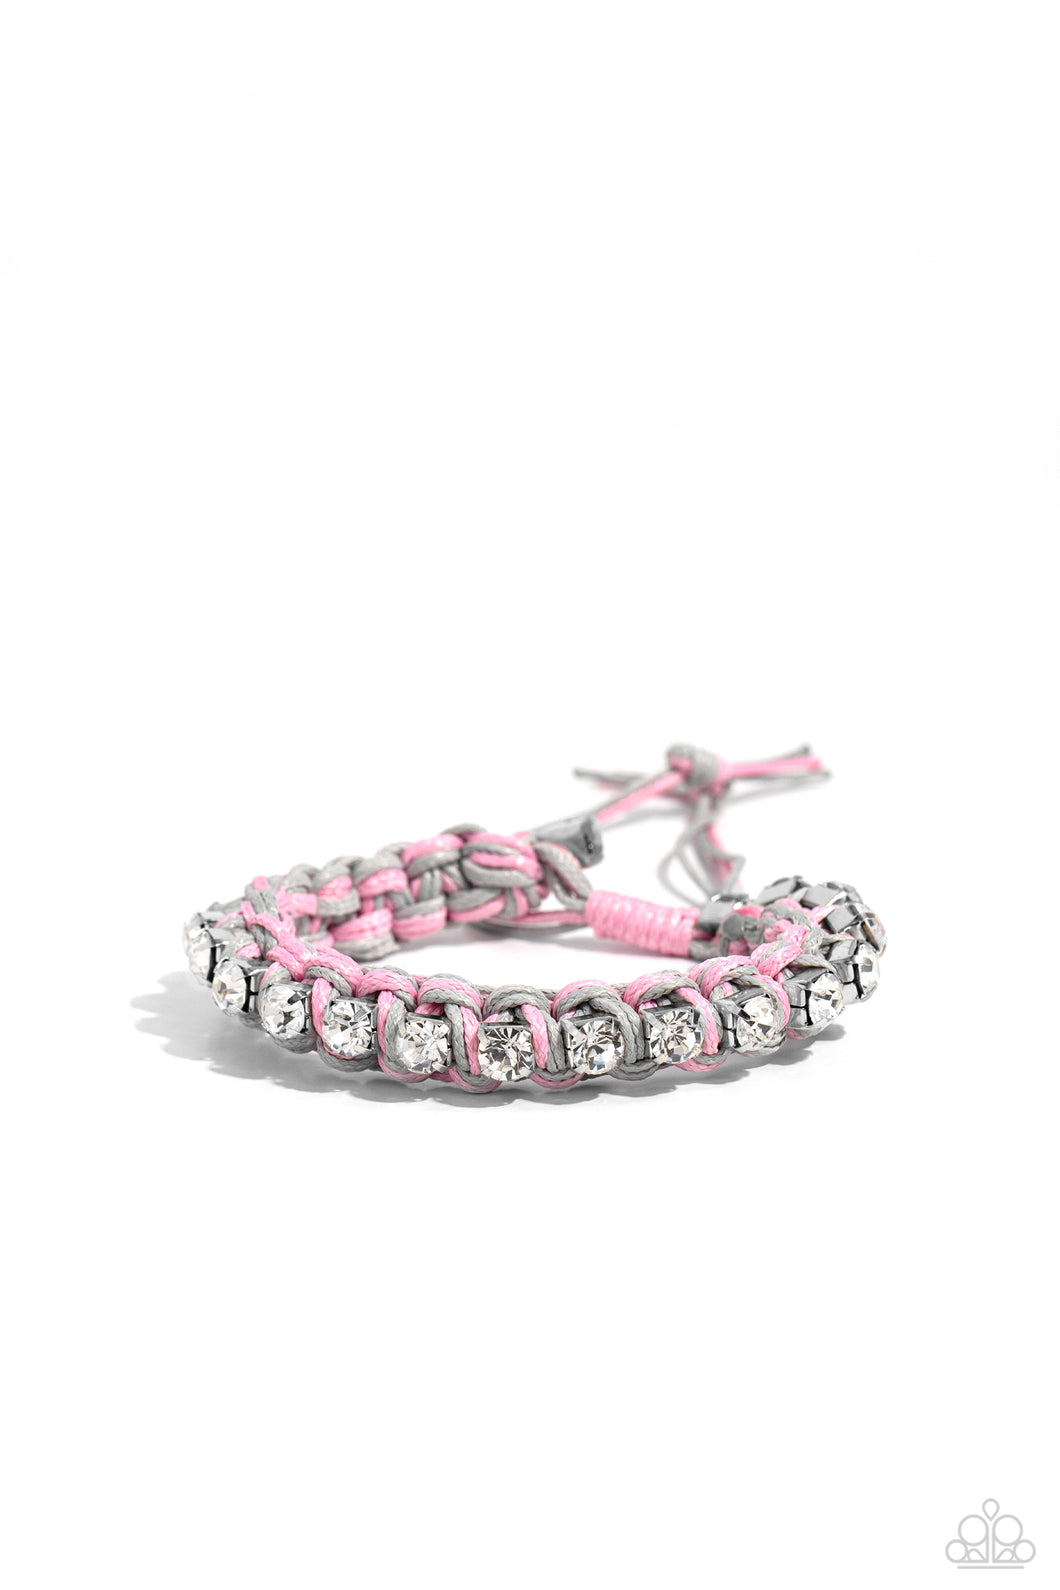 The Next Big STRING - Silver & Pink Bracelet